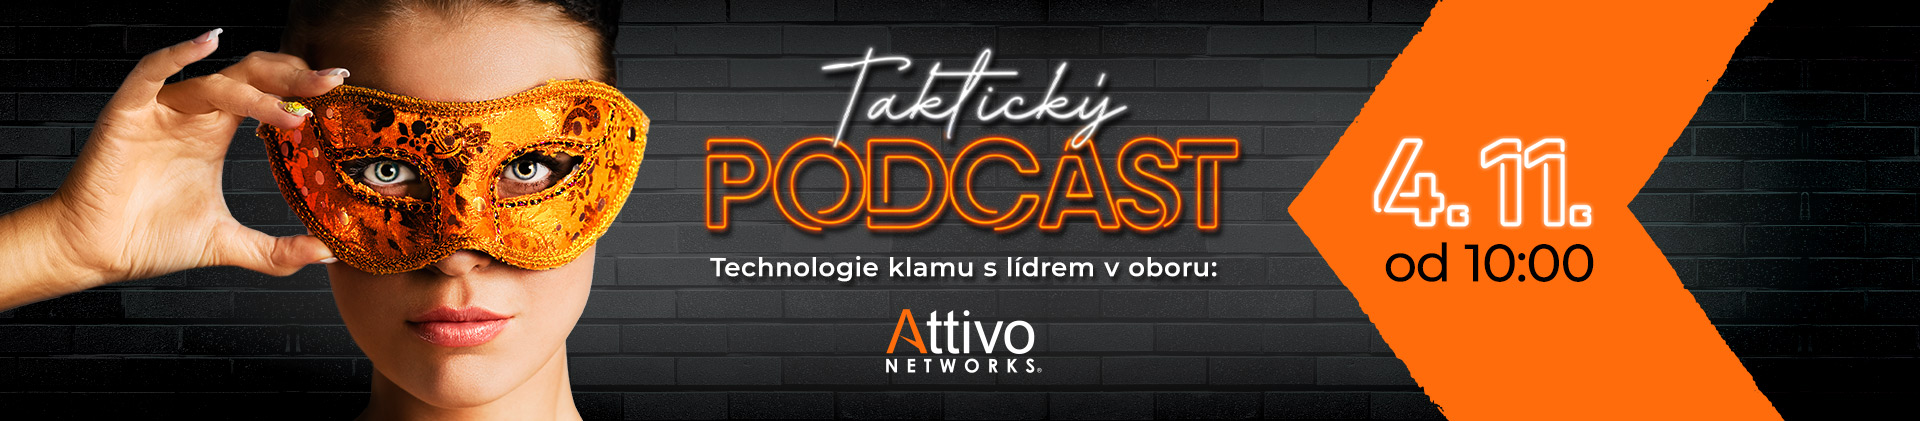 Podcast na technologii klamu